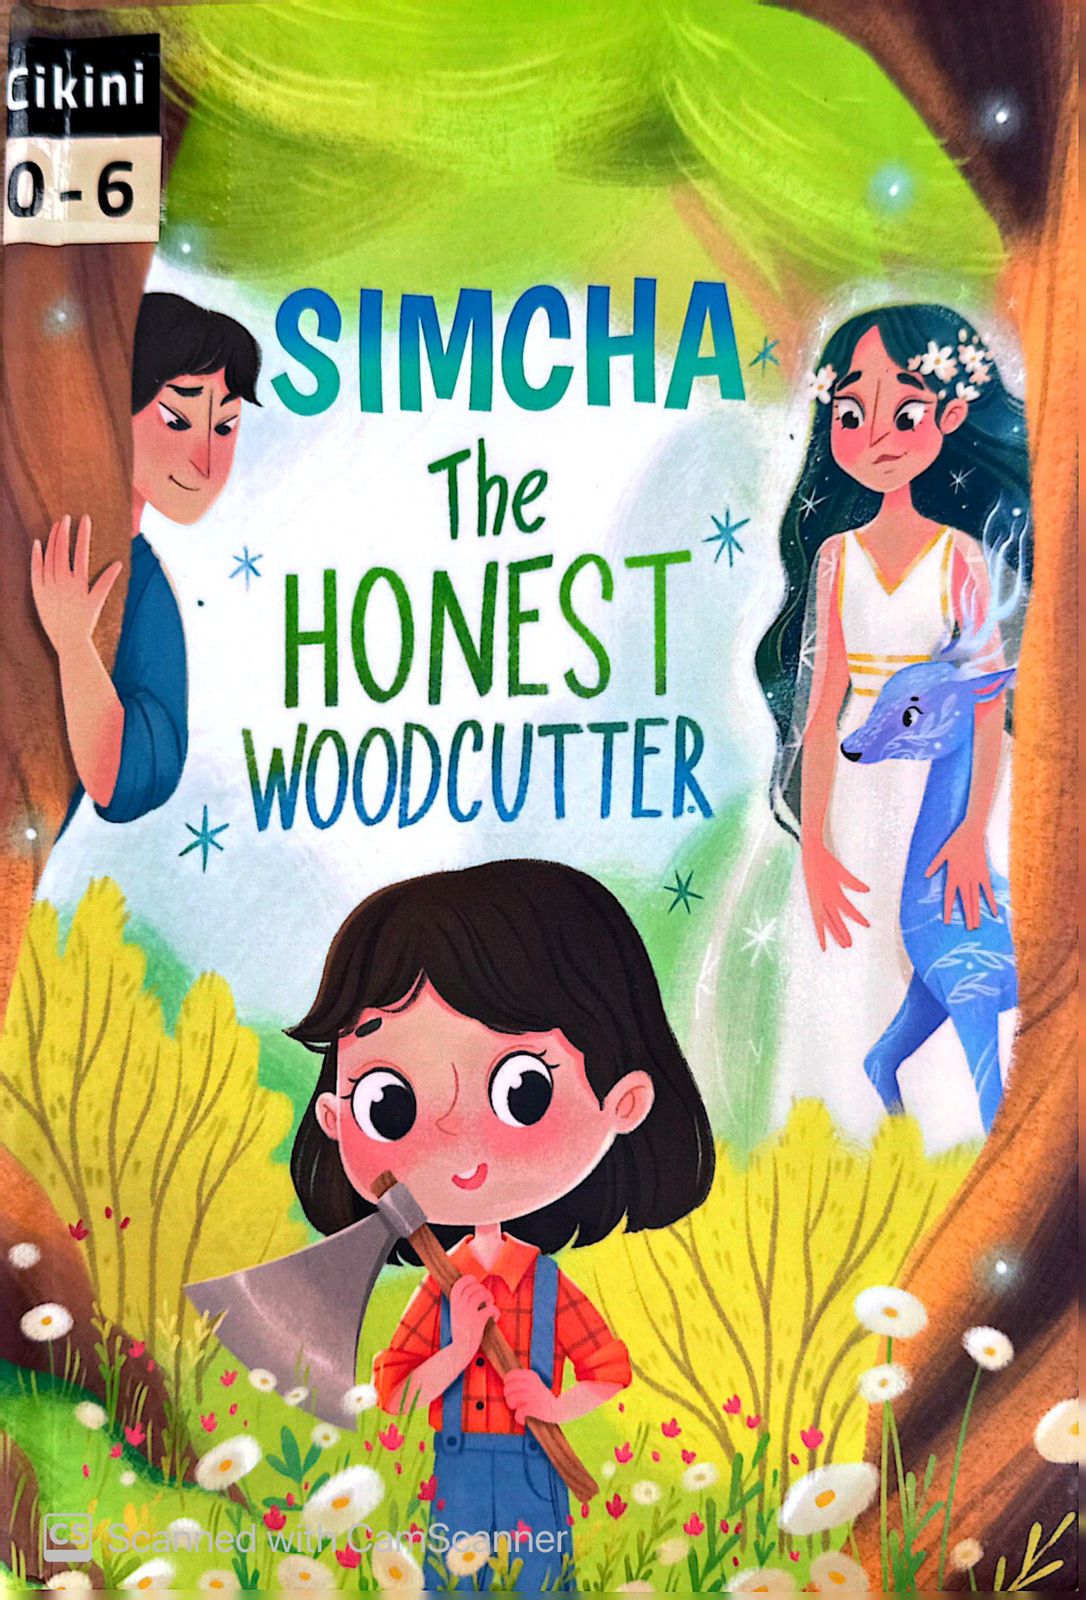 Simcha the honest woodcutter